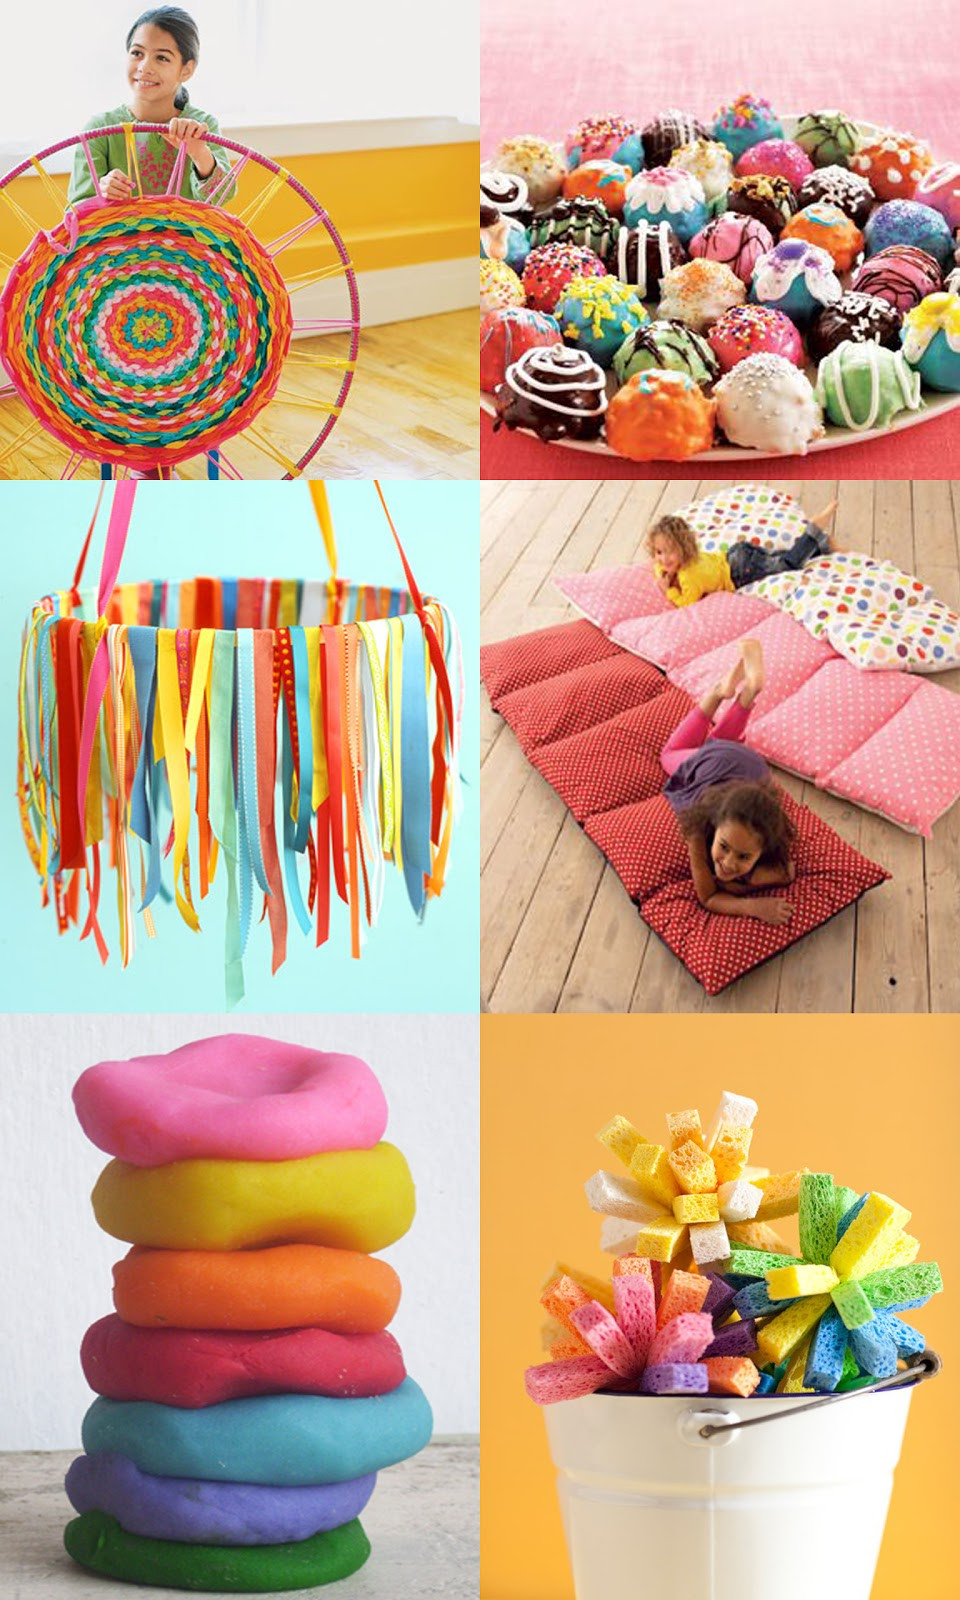 Best ideas about Adult Summer Crafts
. Save or Pin WONDER WREN Super cute Summer Crafts Now.